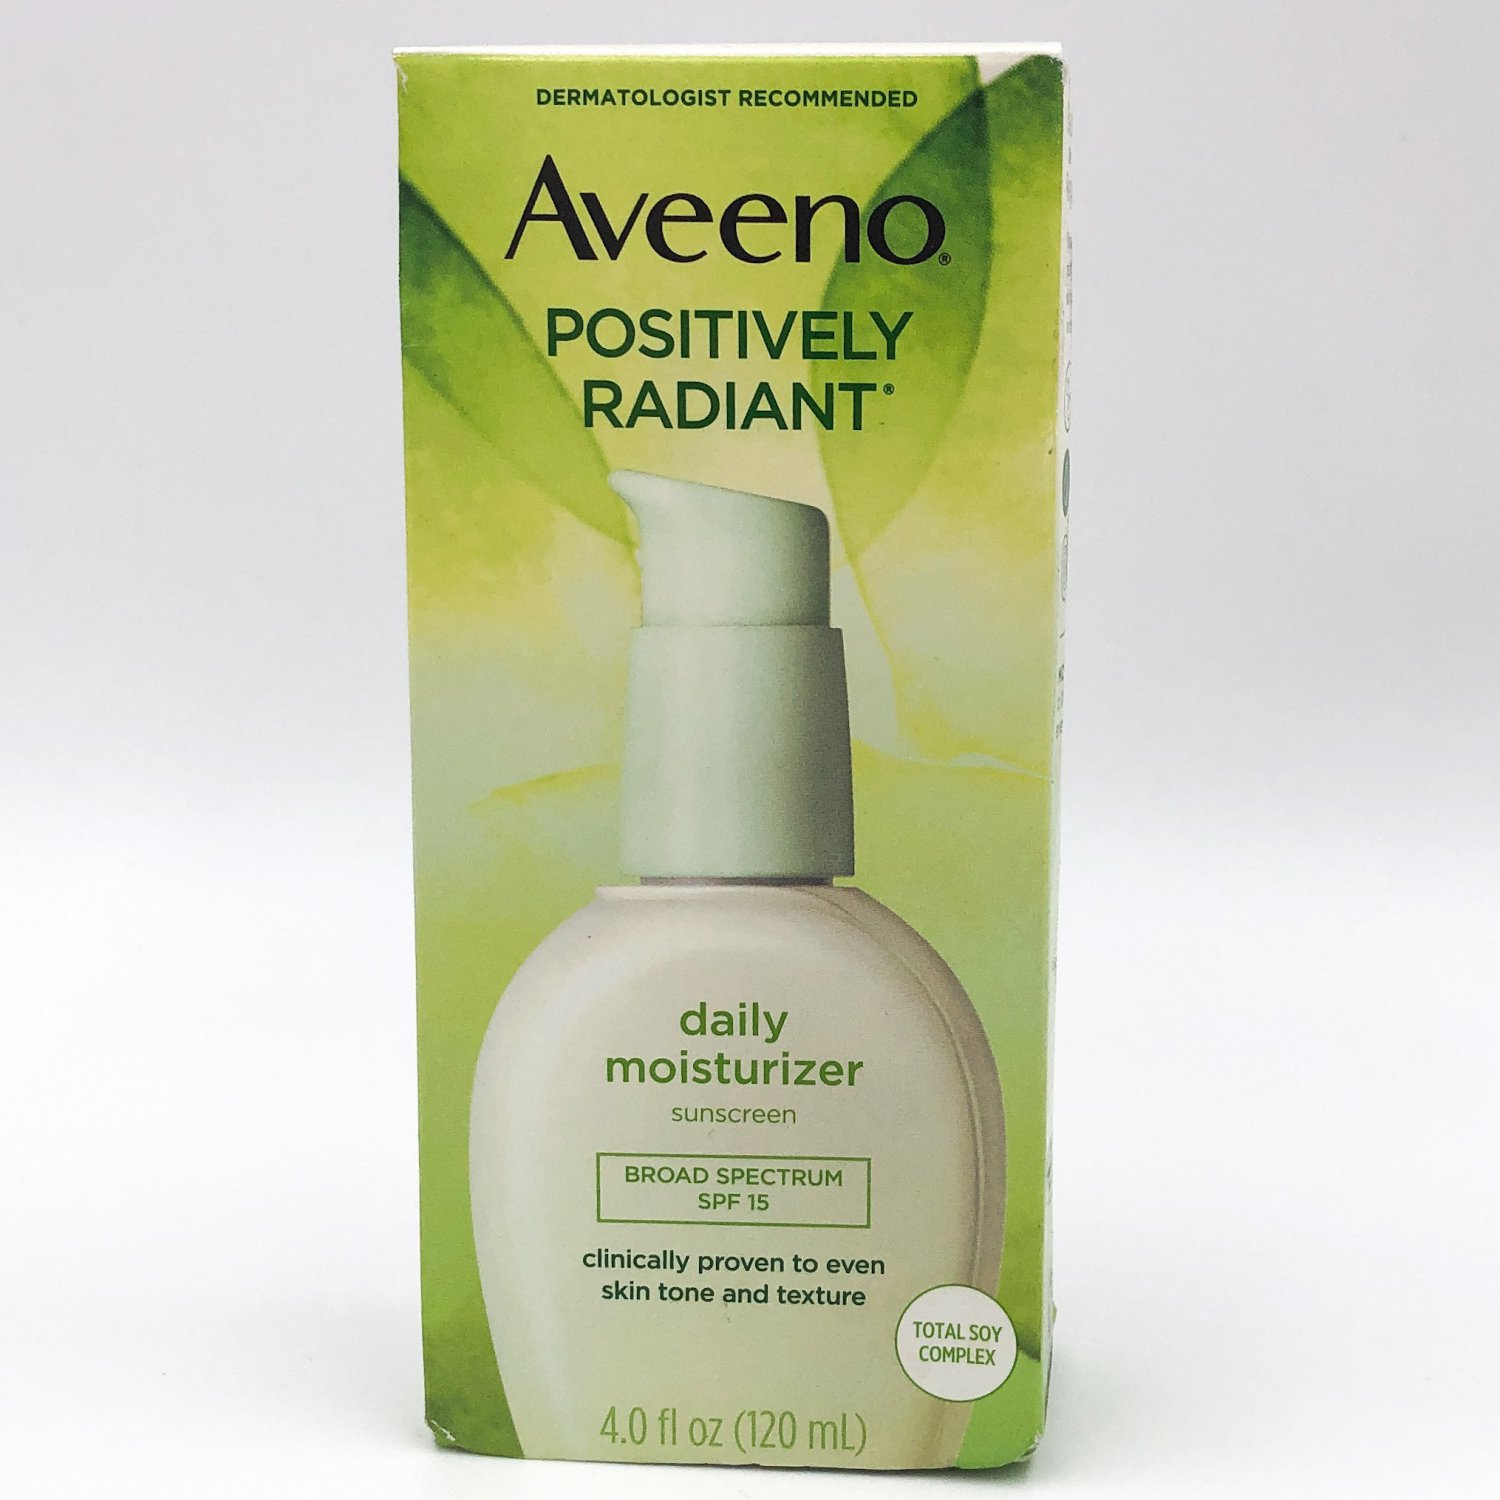 aveeno positively radiant daily moisturizer reviews